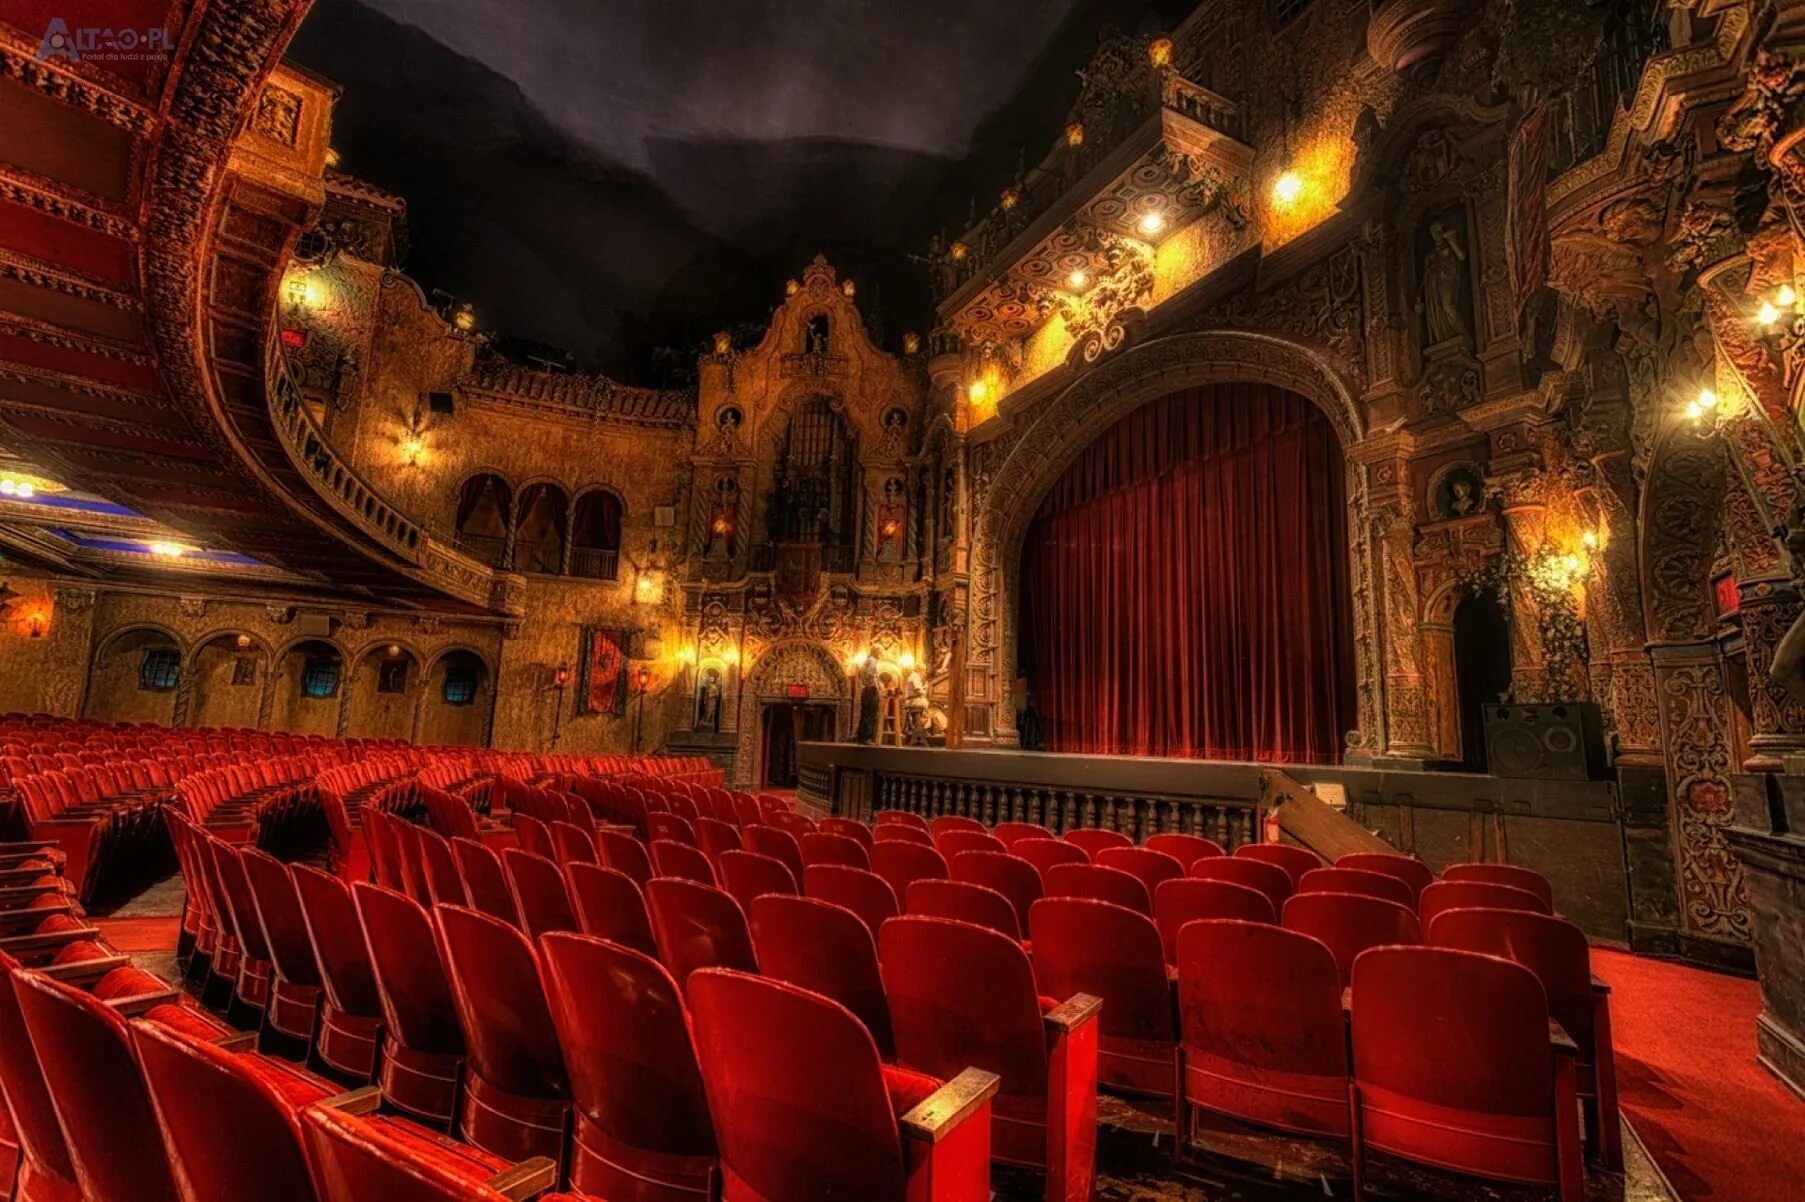 Started theater. Театр. Красивый театр. Театр картинки. Красивые театральные залы.